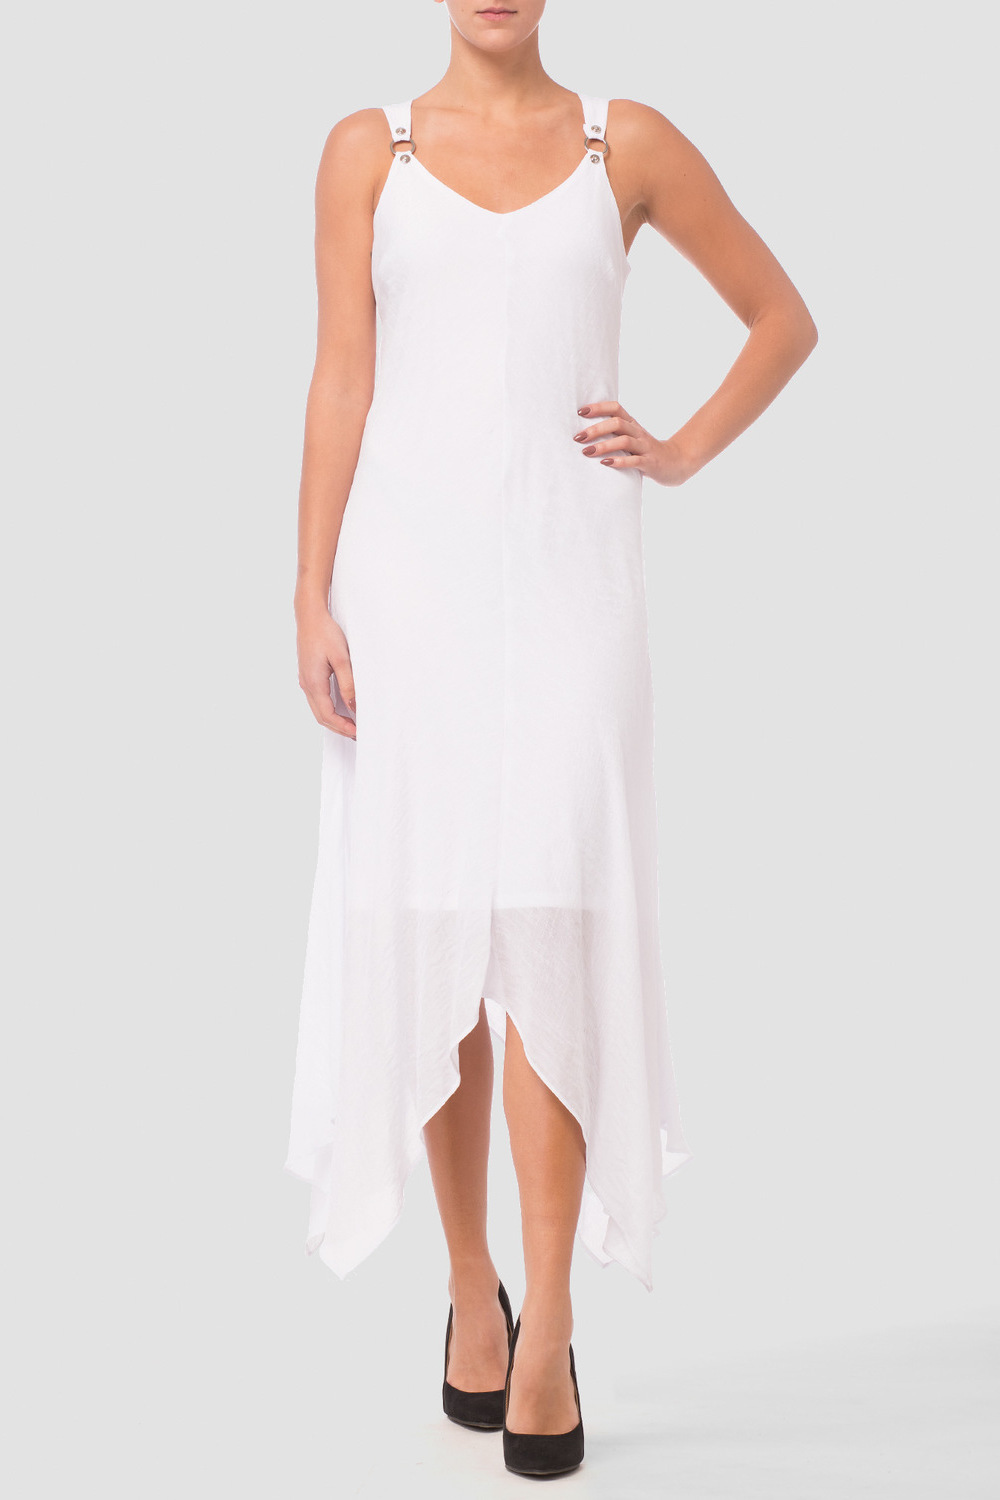 Joseph Ribkoff dress style 181475. White